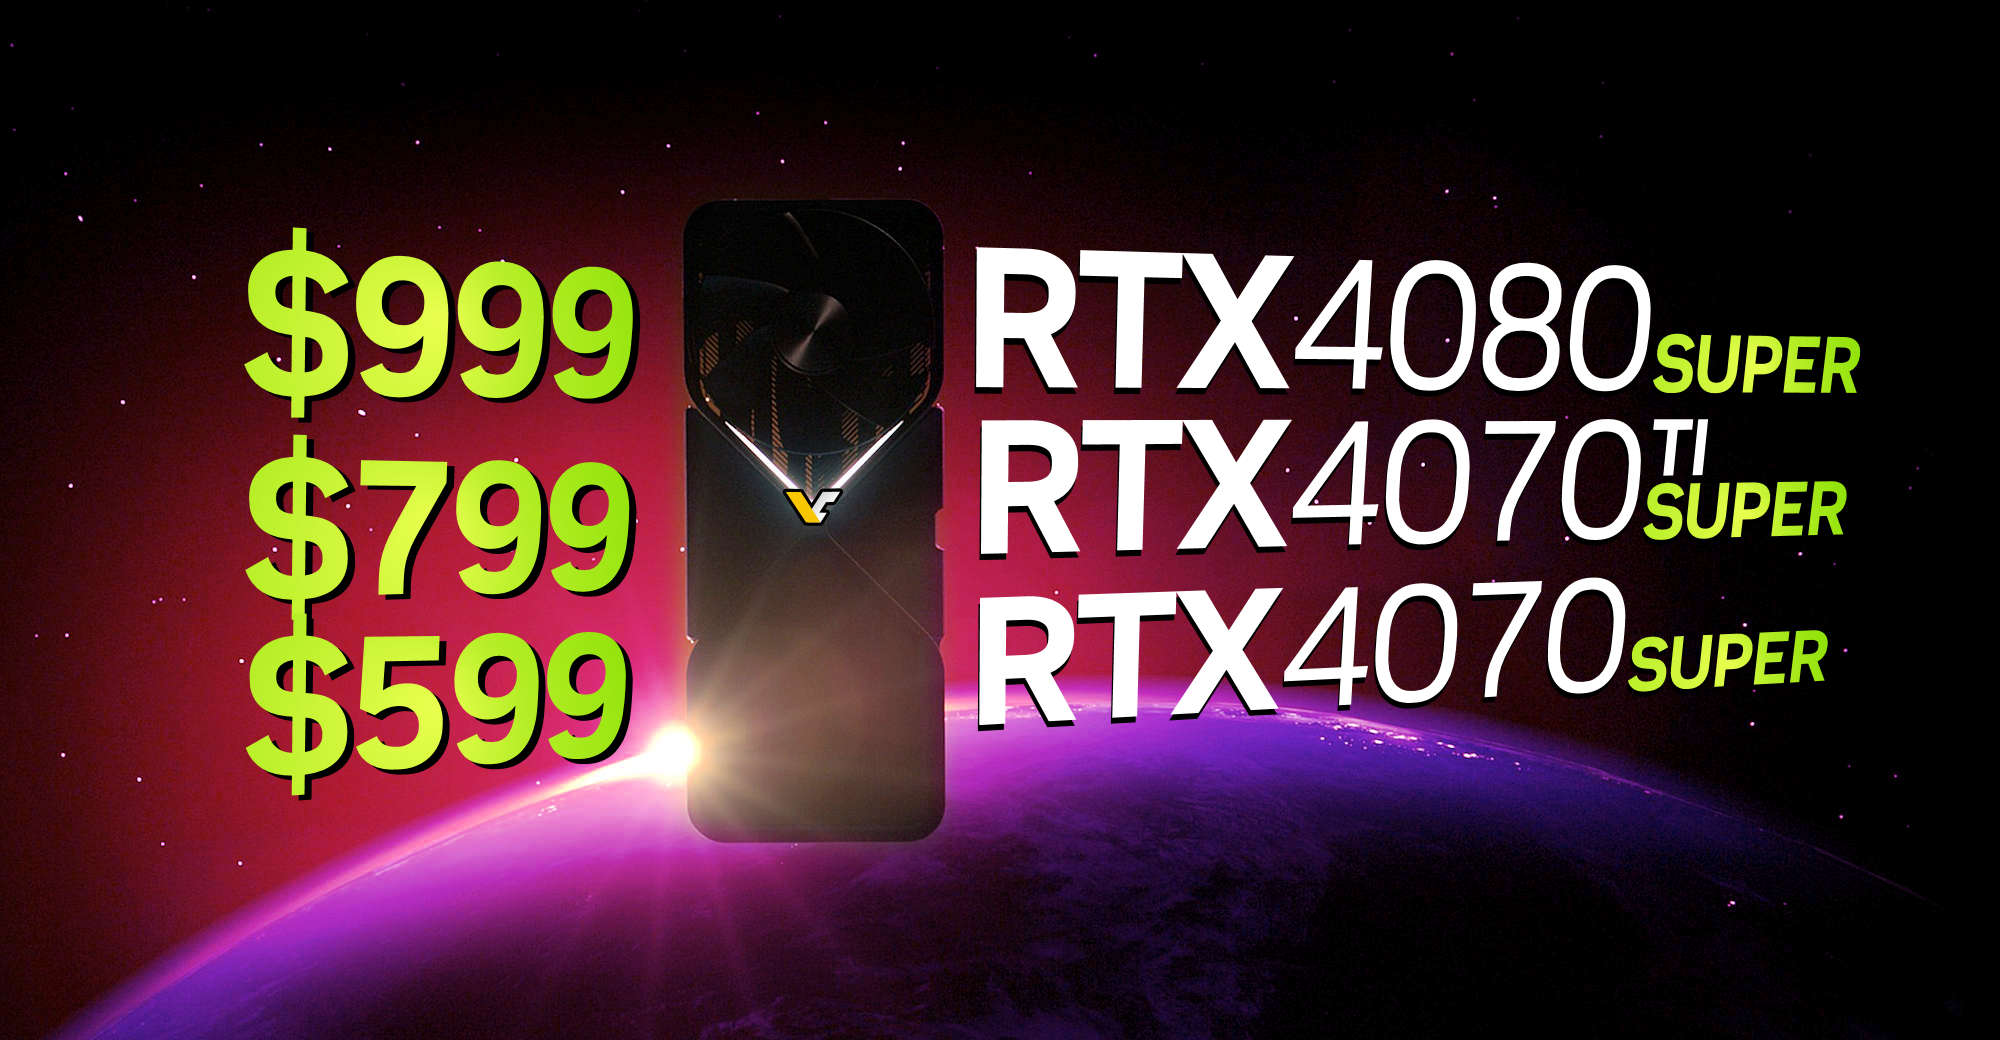 NVIDIA RTX 4080 SUPER dilaporkan berharga $999, RTX 4070 Ti/4070 SUPER seharga $799/$599